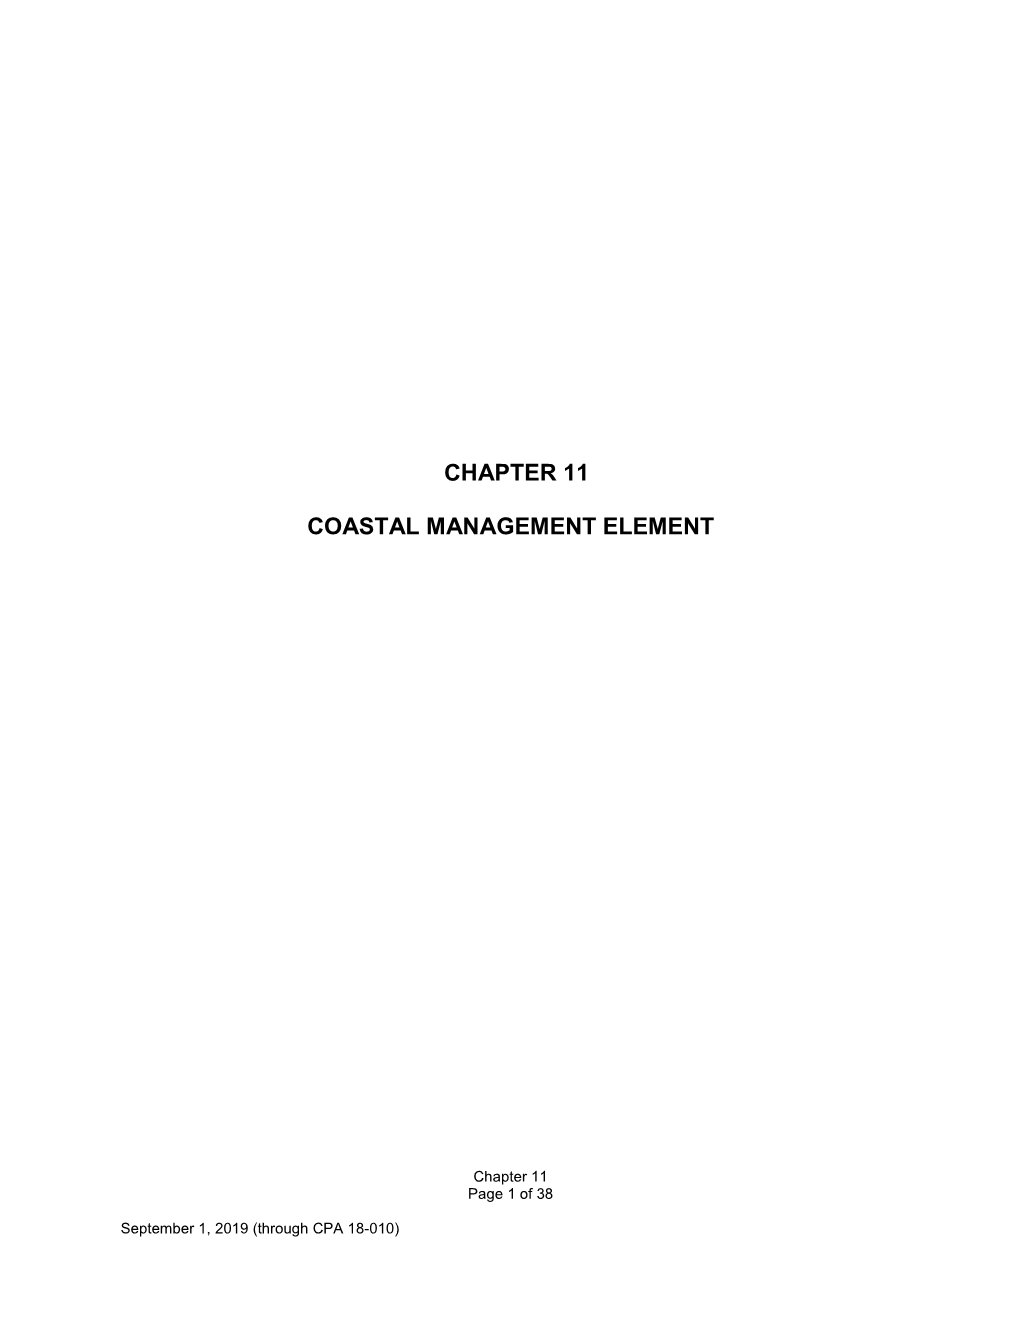 Chapter 11 Coastal Management Element